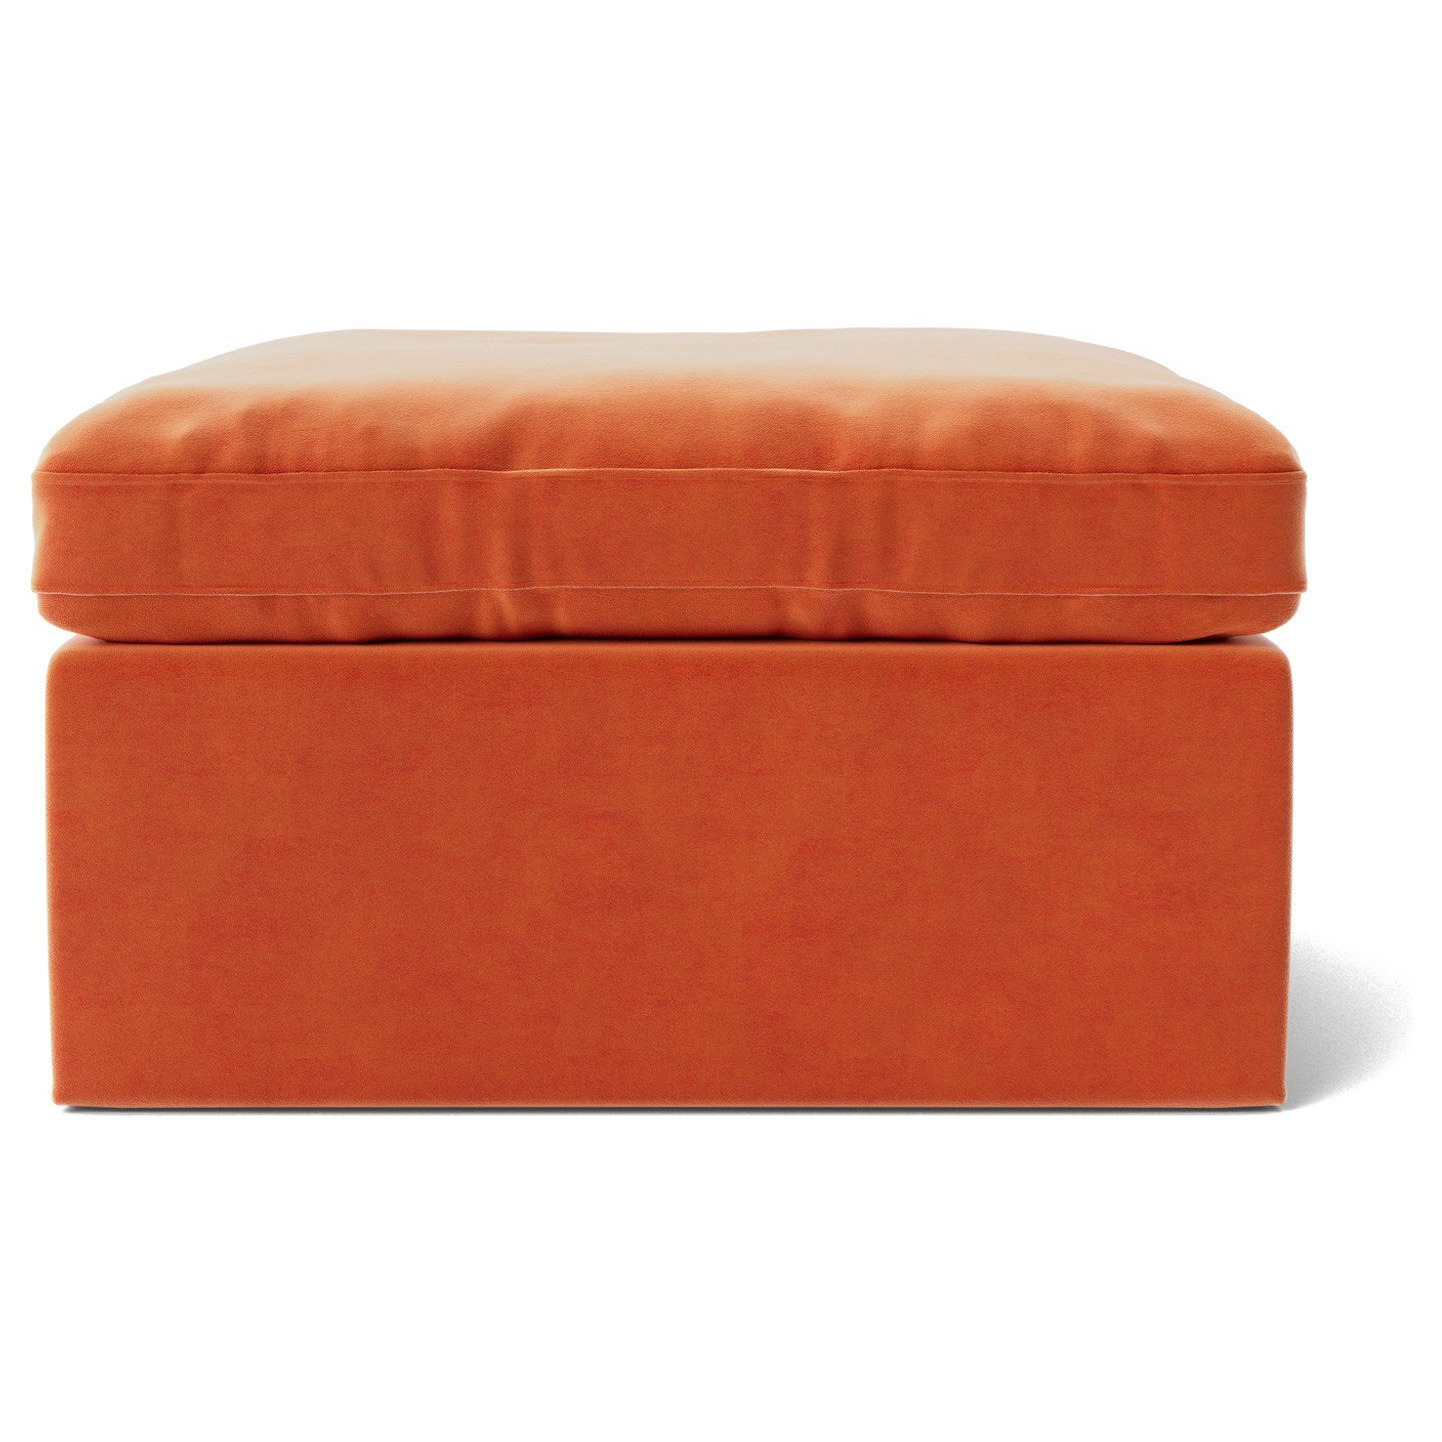 Swoon Seattle Velvet Ottoman Footstool - Burnt Orange - image 1